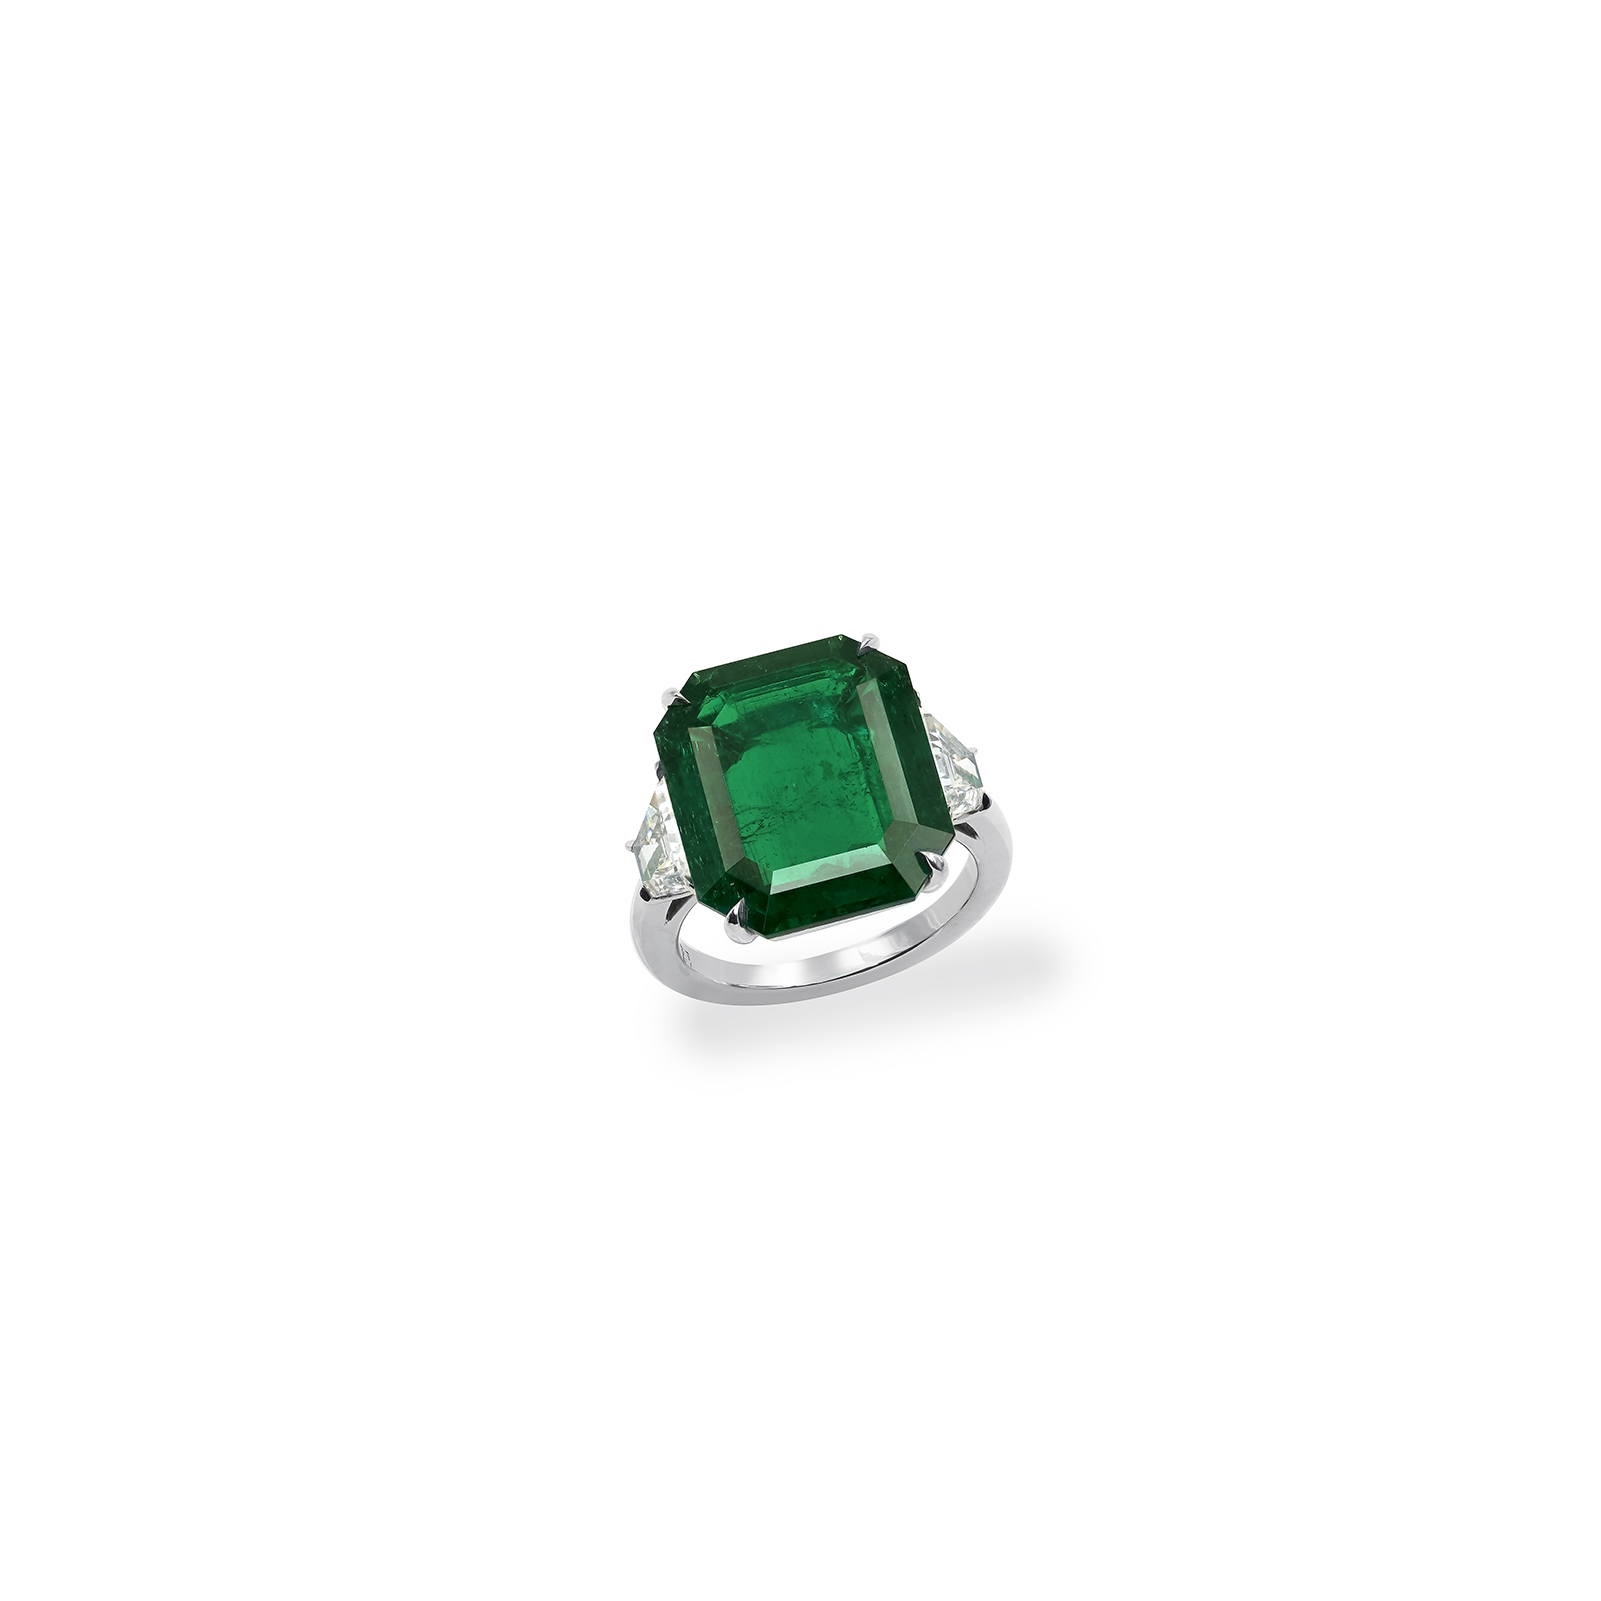 9 carat emerald cut ring